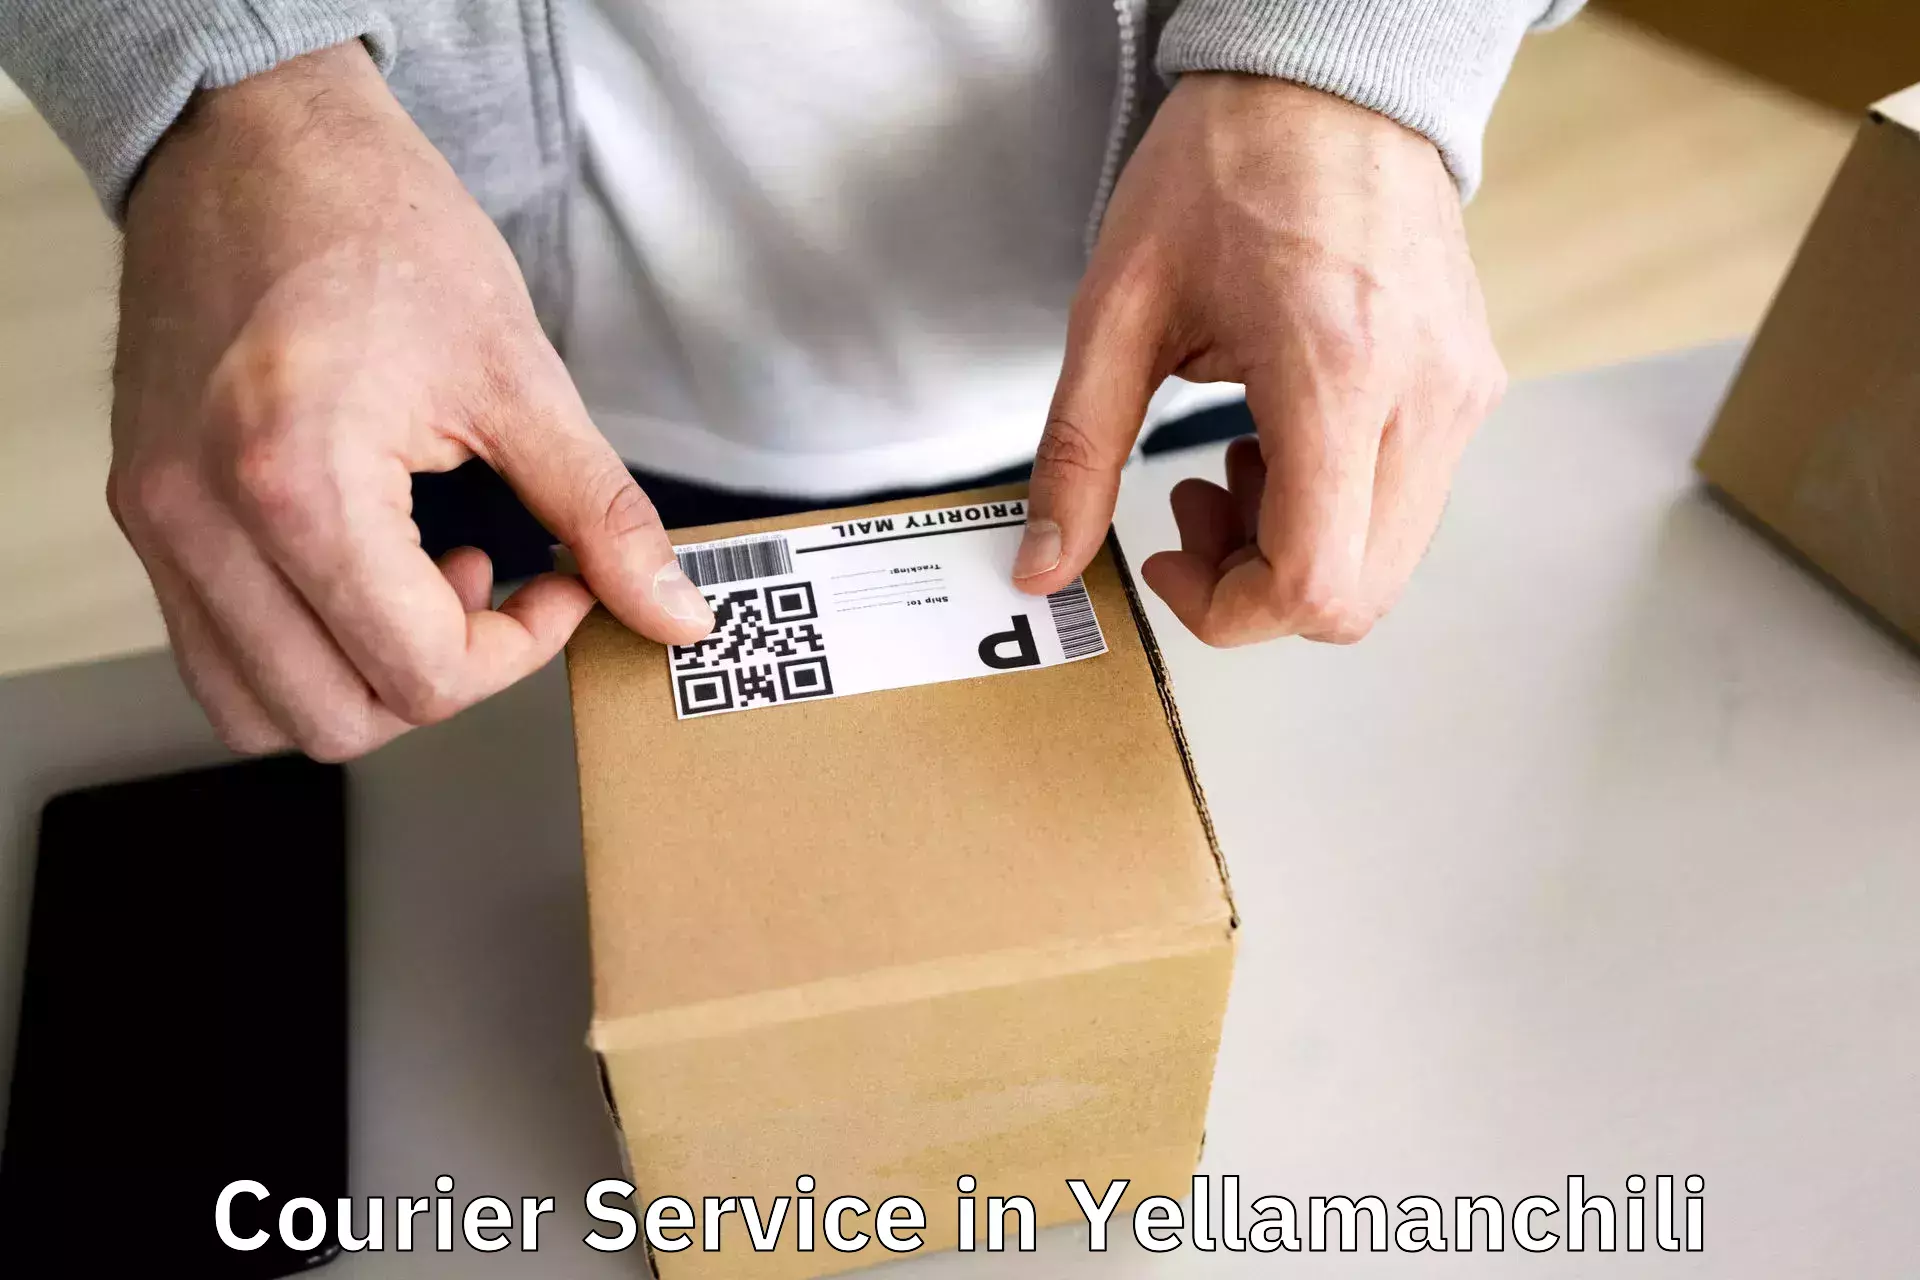 On-demand shipping options in Yellamanchili